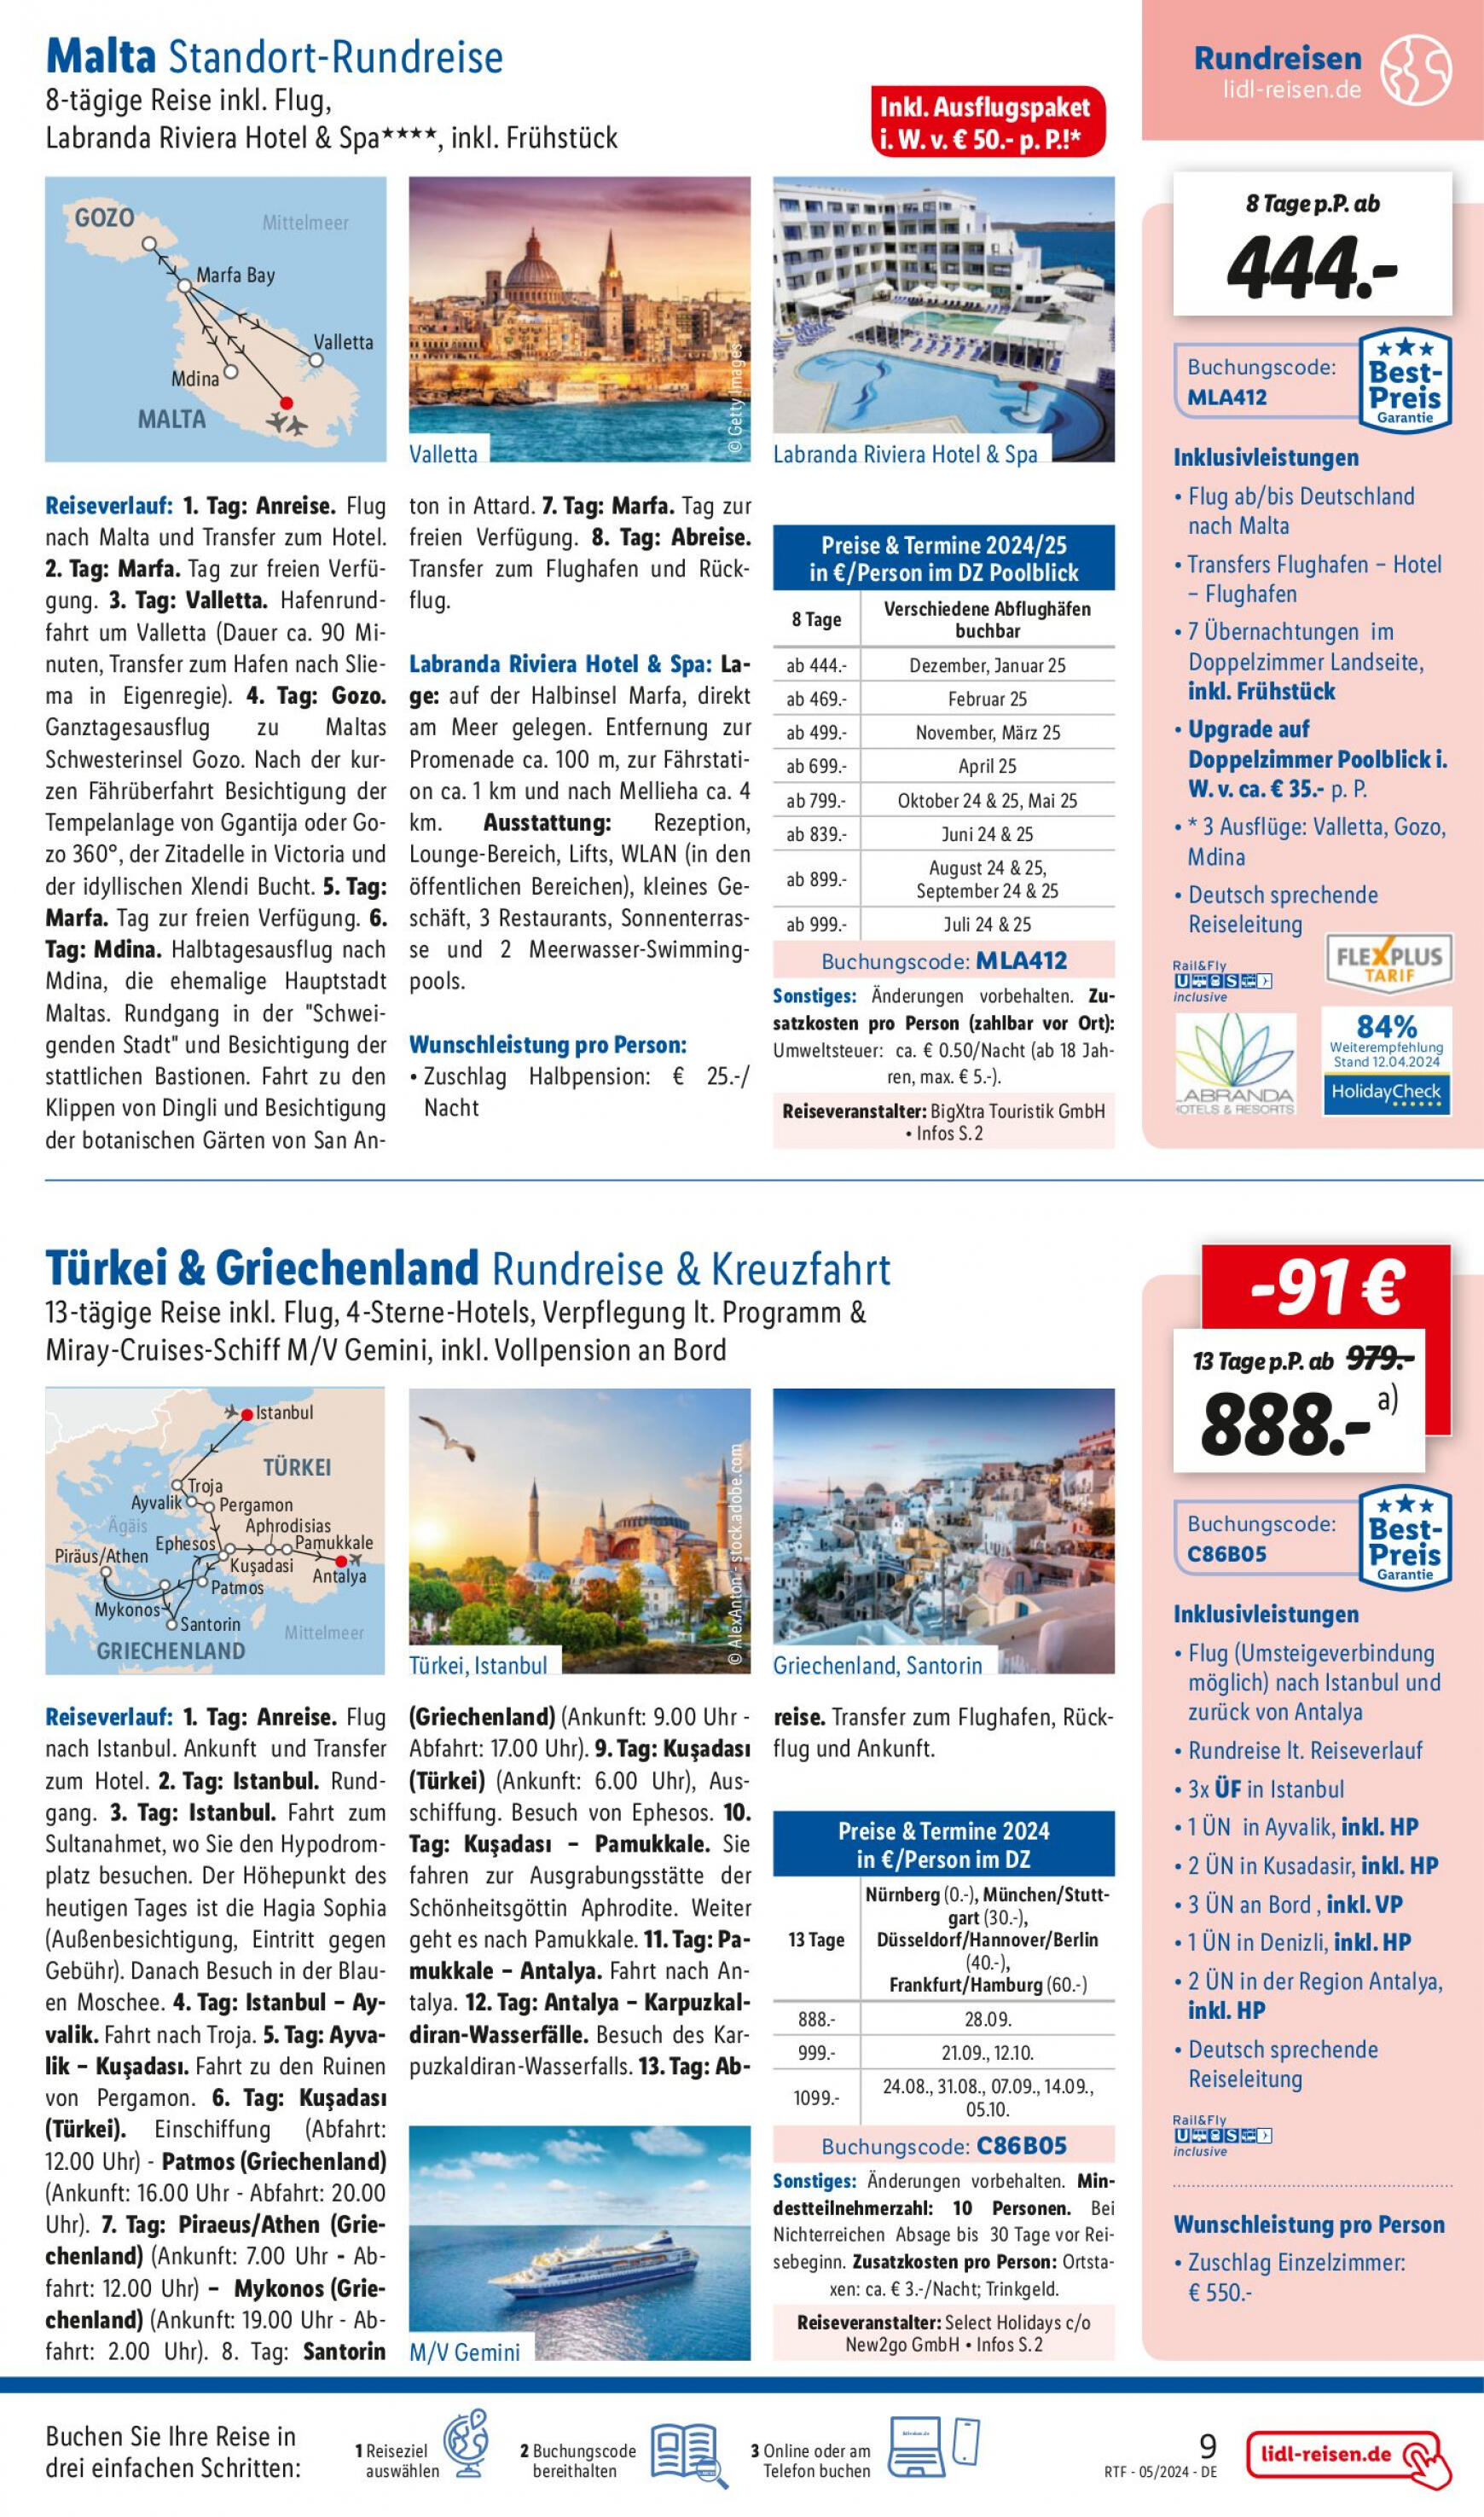 lidl - Flyer Lidl-reisen.de aktuell 15.05. - 15.06. - page: 9